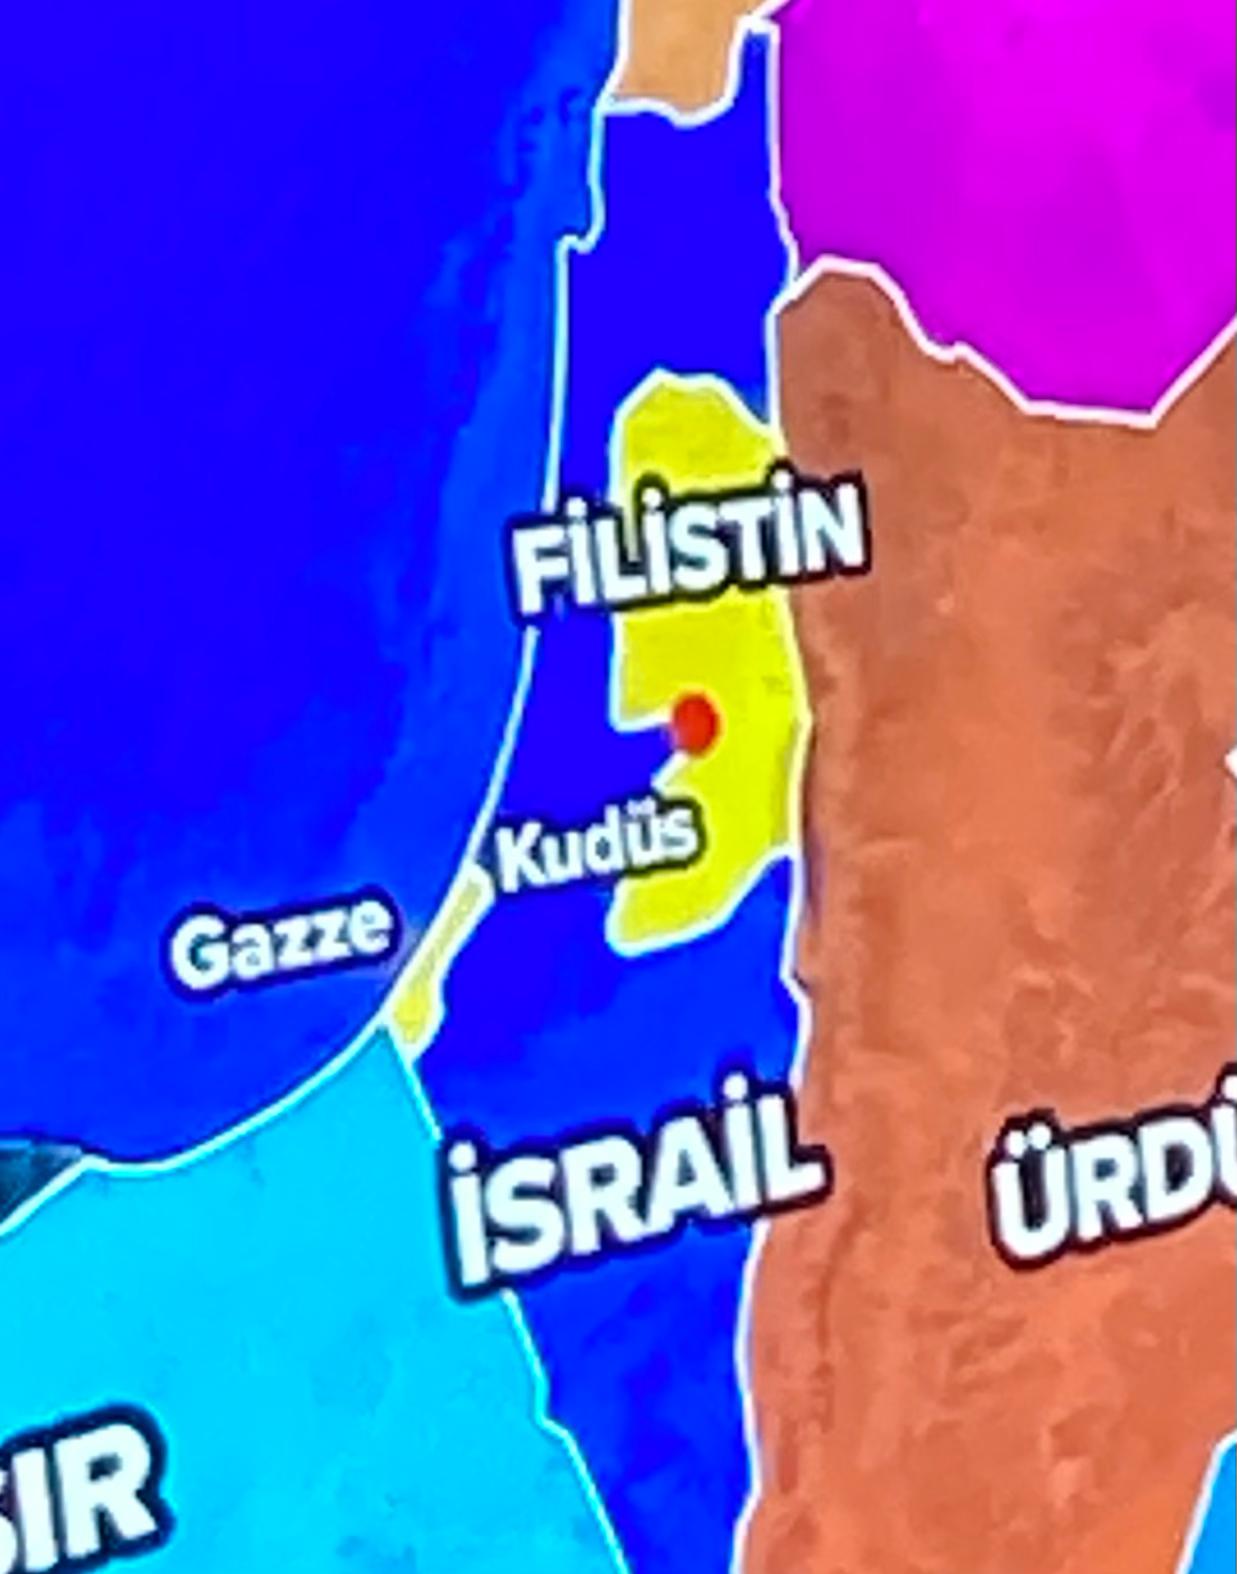 israil-ürdün-filistin harita